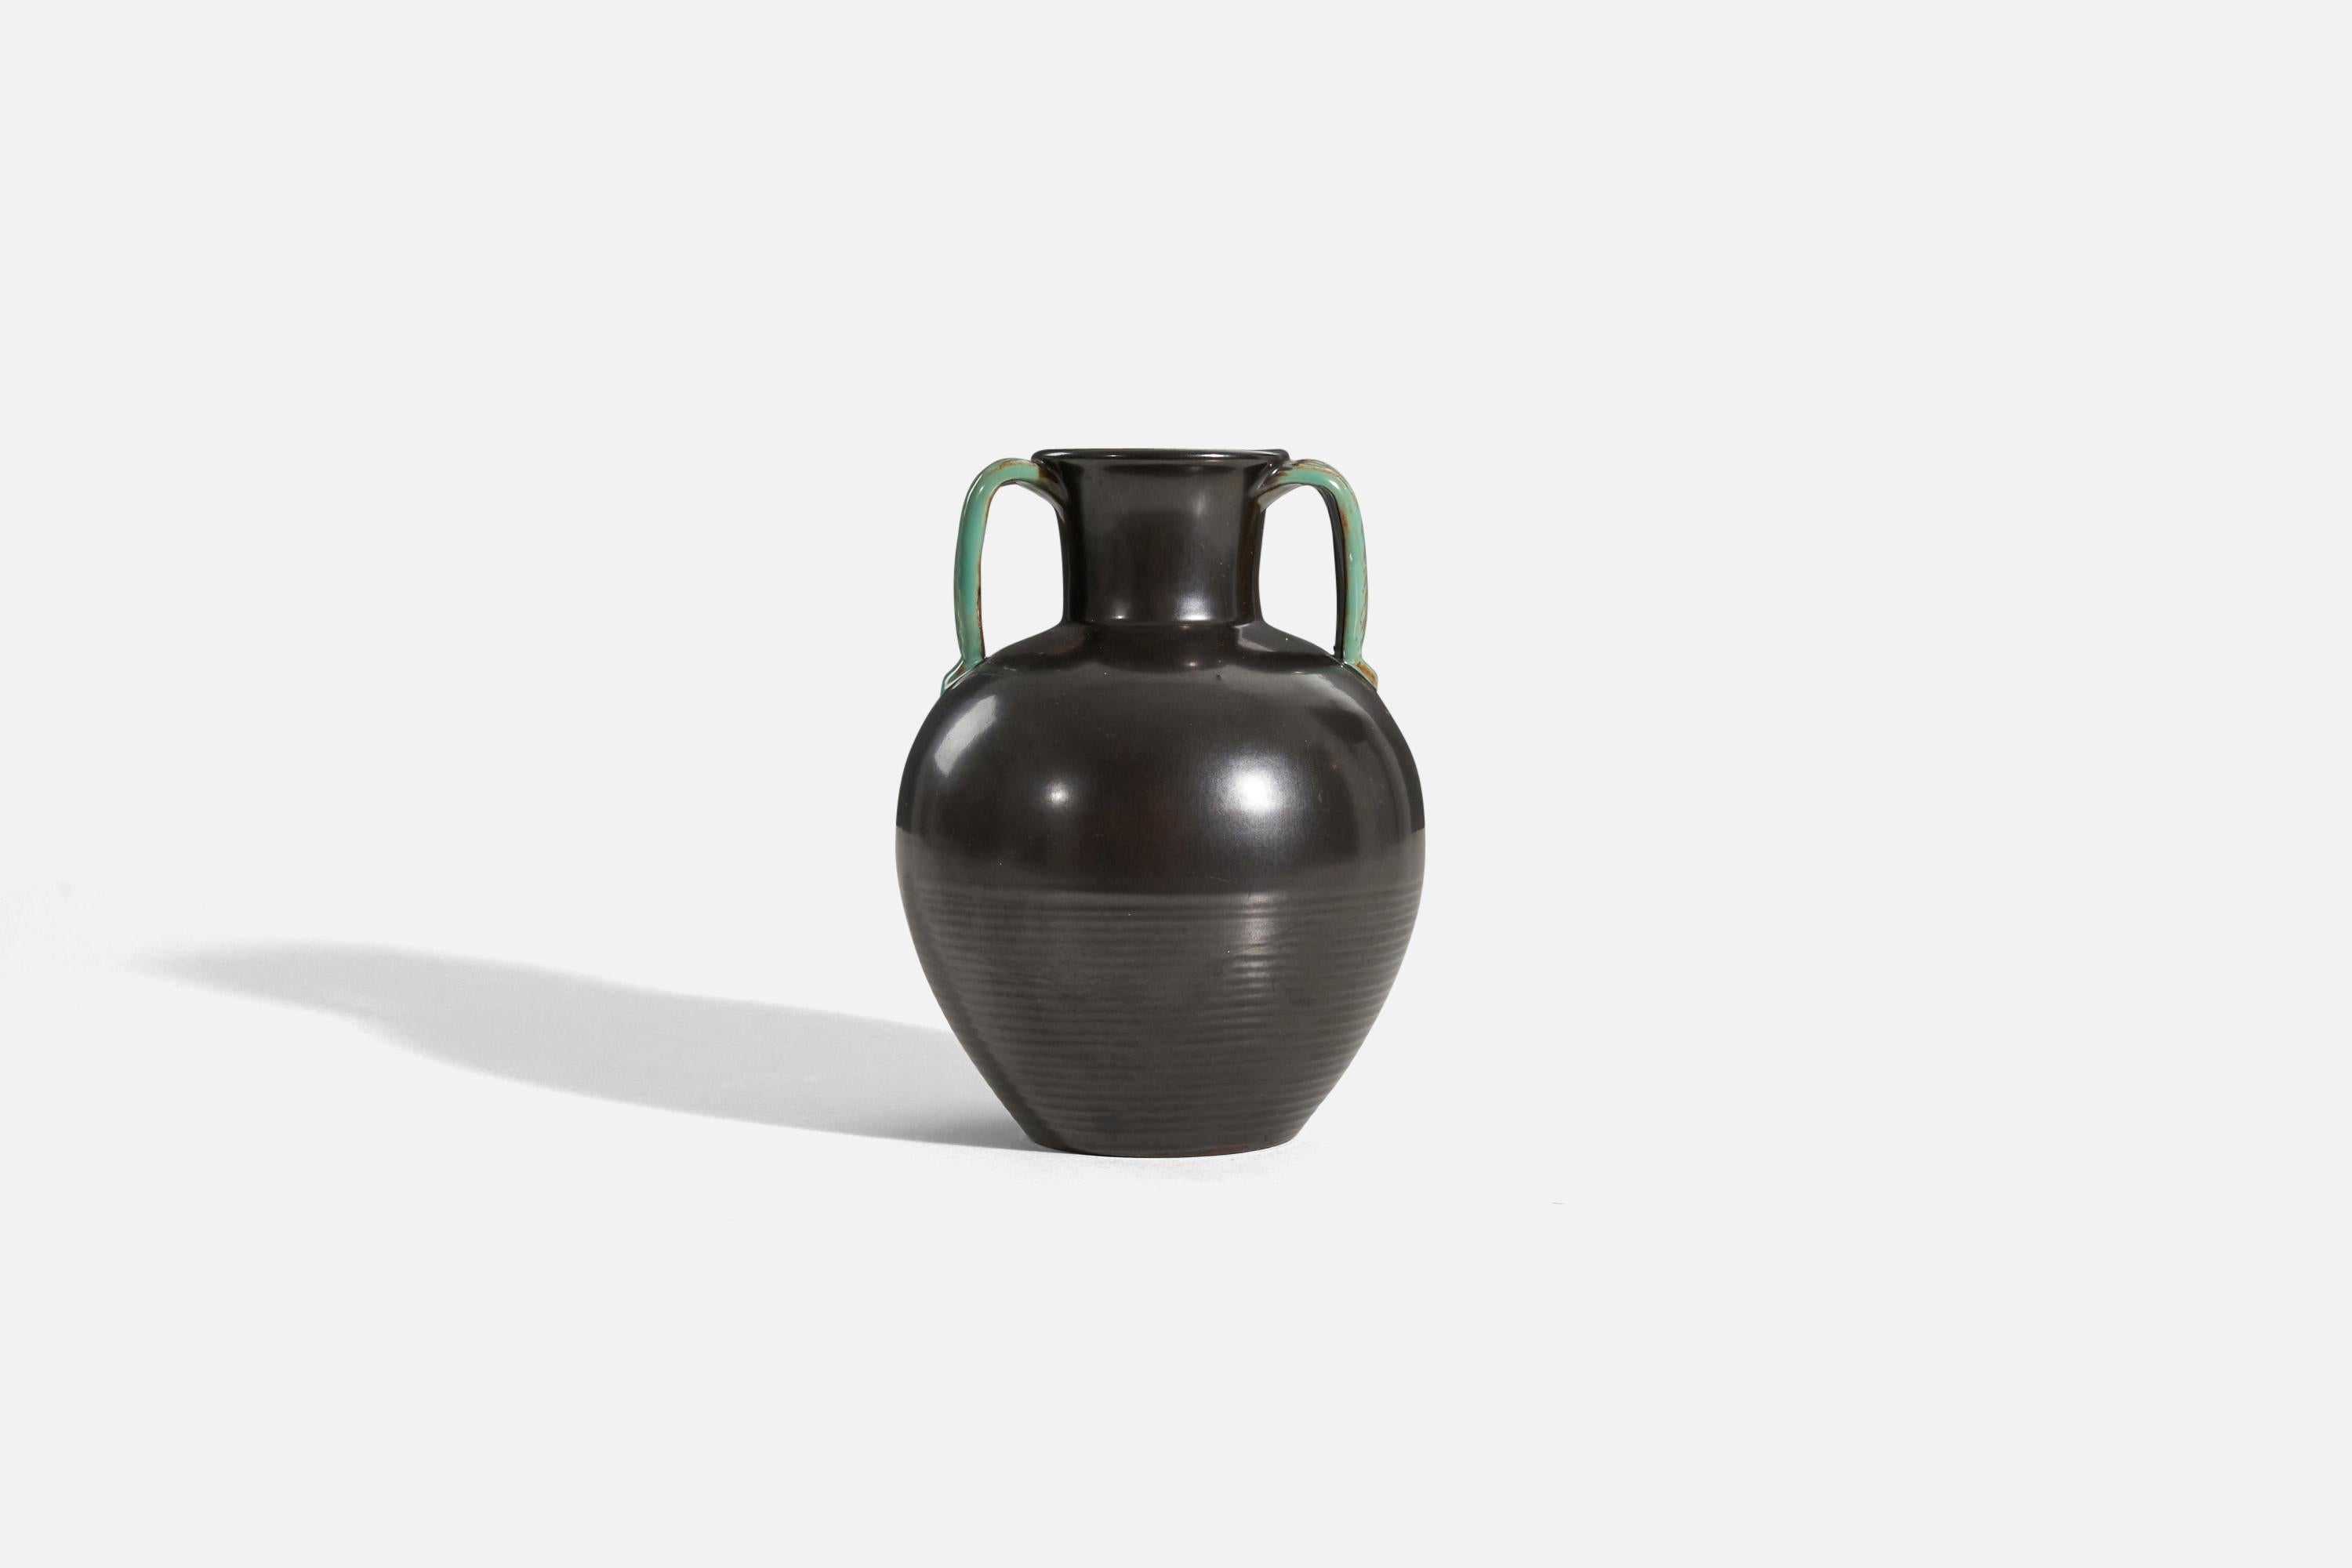 A black and green, glazed earthenware vase designed and produced by Upsala-Ekeby, Sweden, 1940s.

